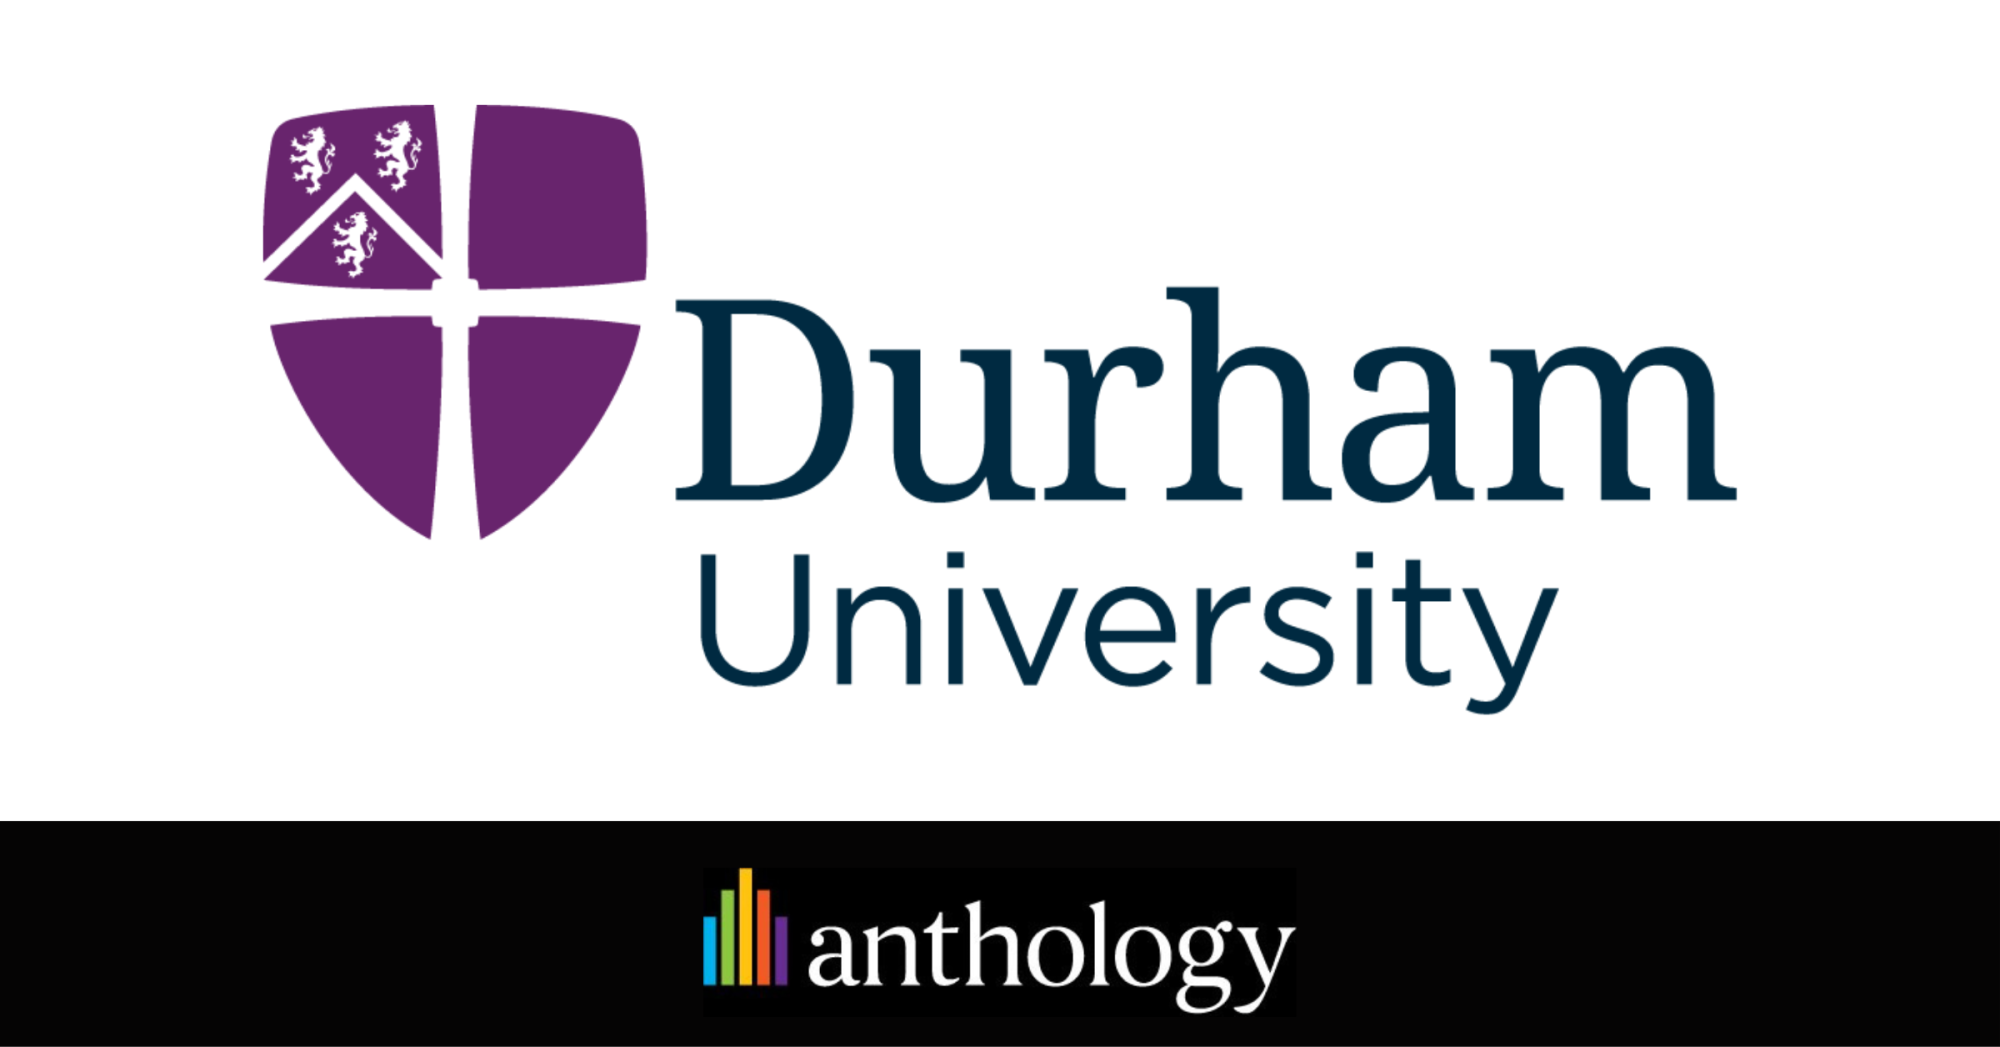 Durham University's purple crest logo and name on a white background above the Anthology logo.